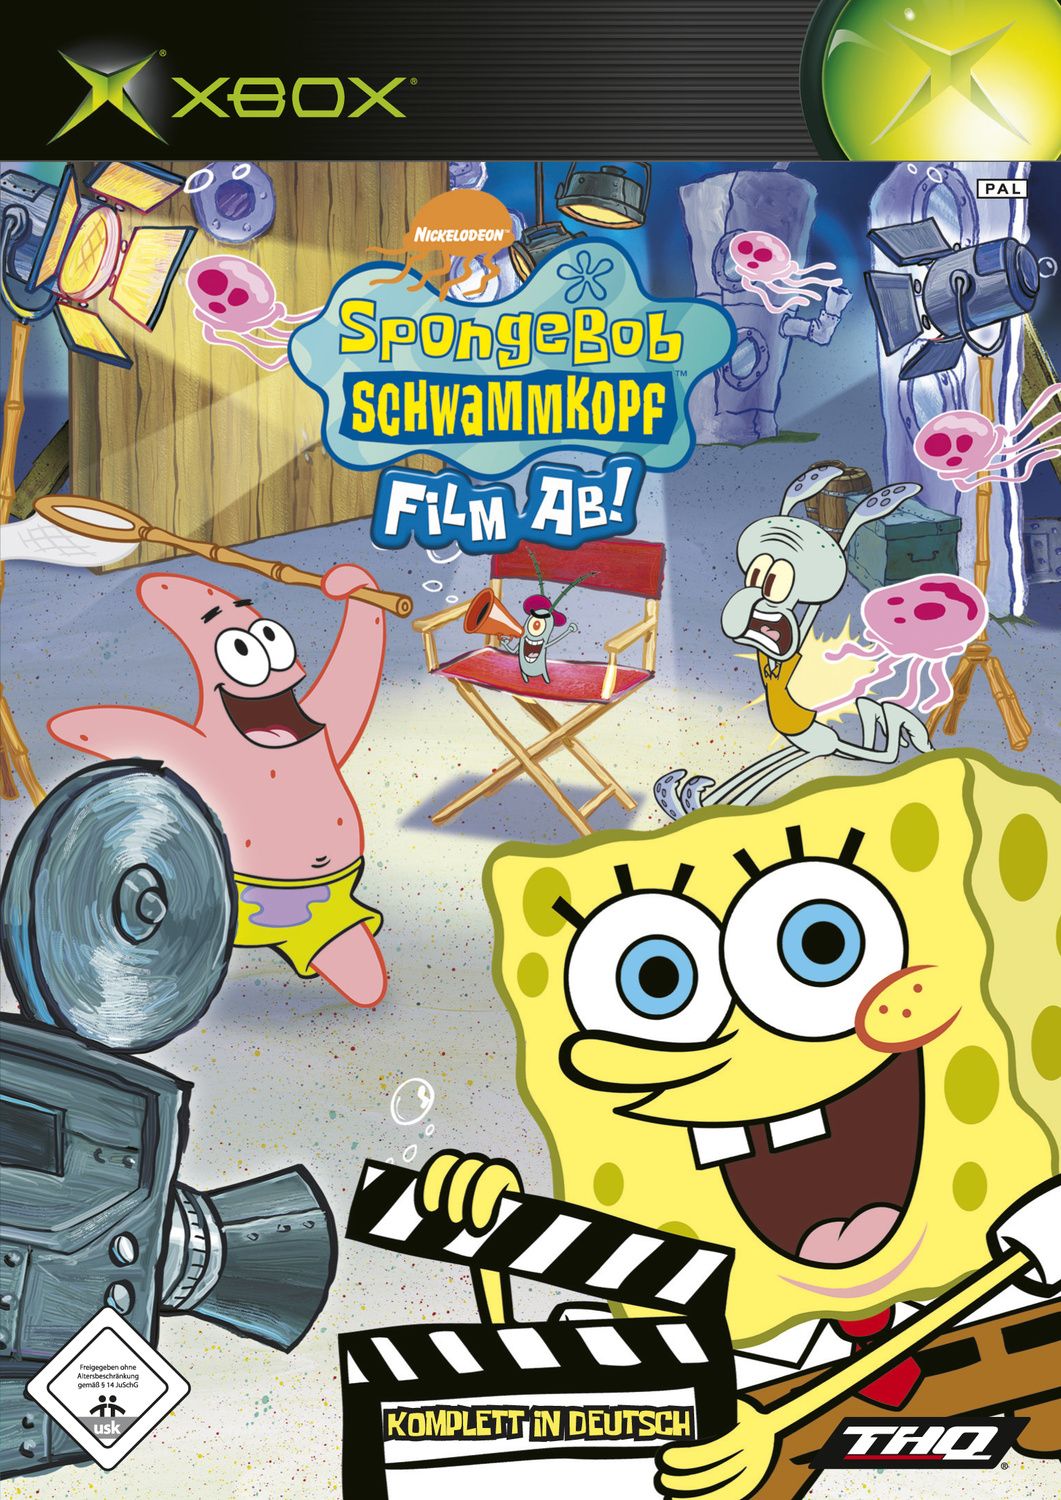 SpongeBob SquarePants: Lights, Camera, Pants! (Német nyelvű) - Xbox Classic Játékok